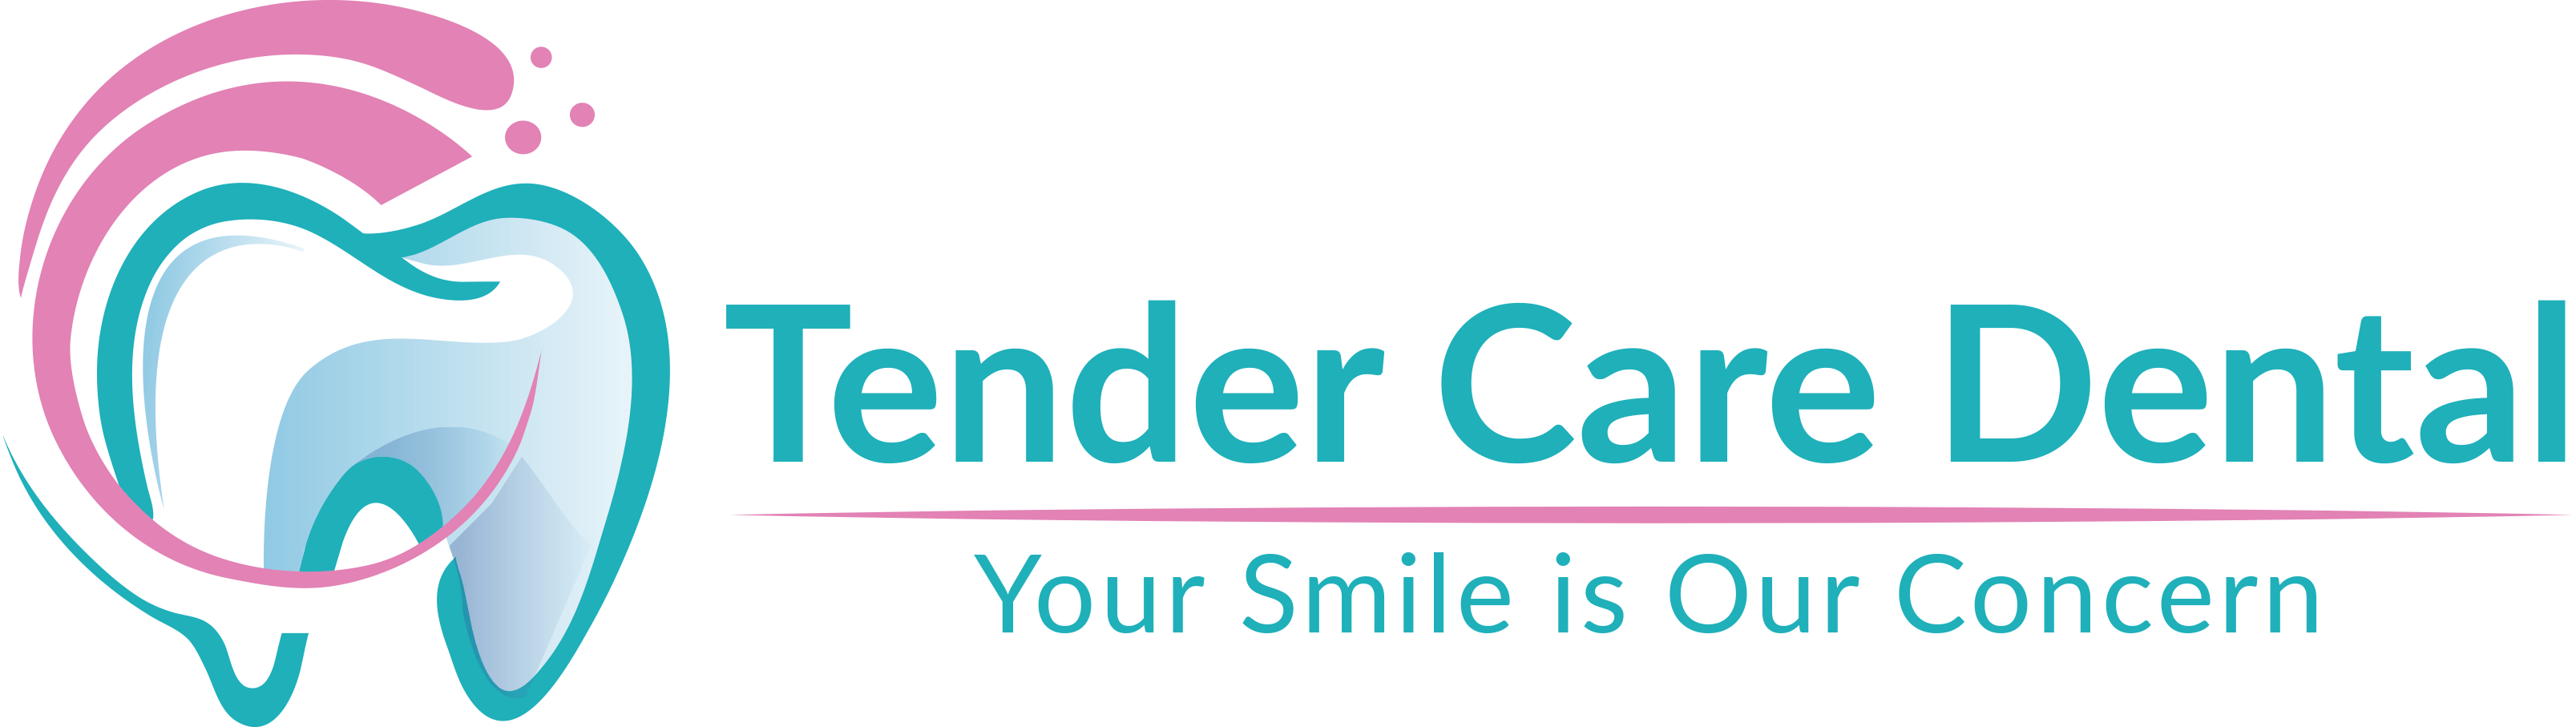 Diamond Tooth Logo - Tender Care Dental Clinic. Dentist in Kenya. Dental Services in Kenya